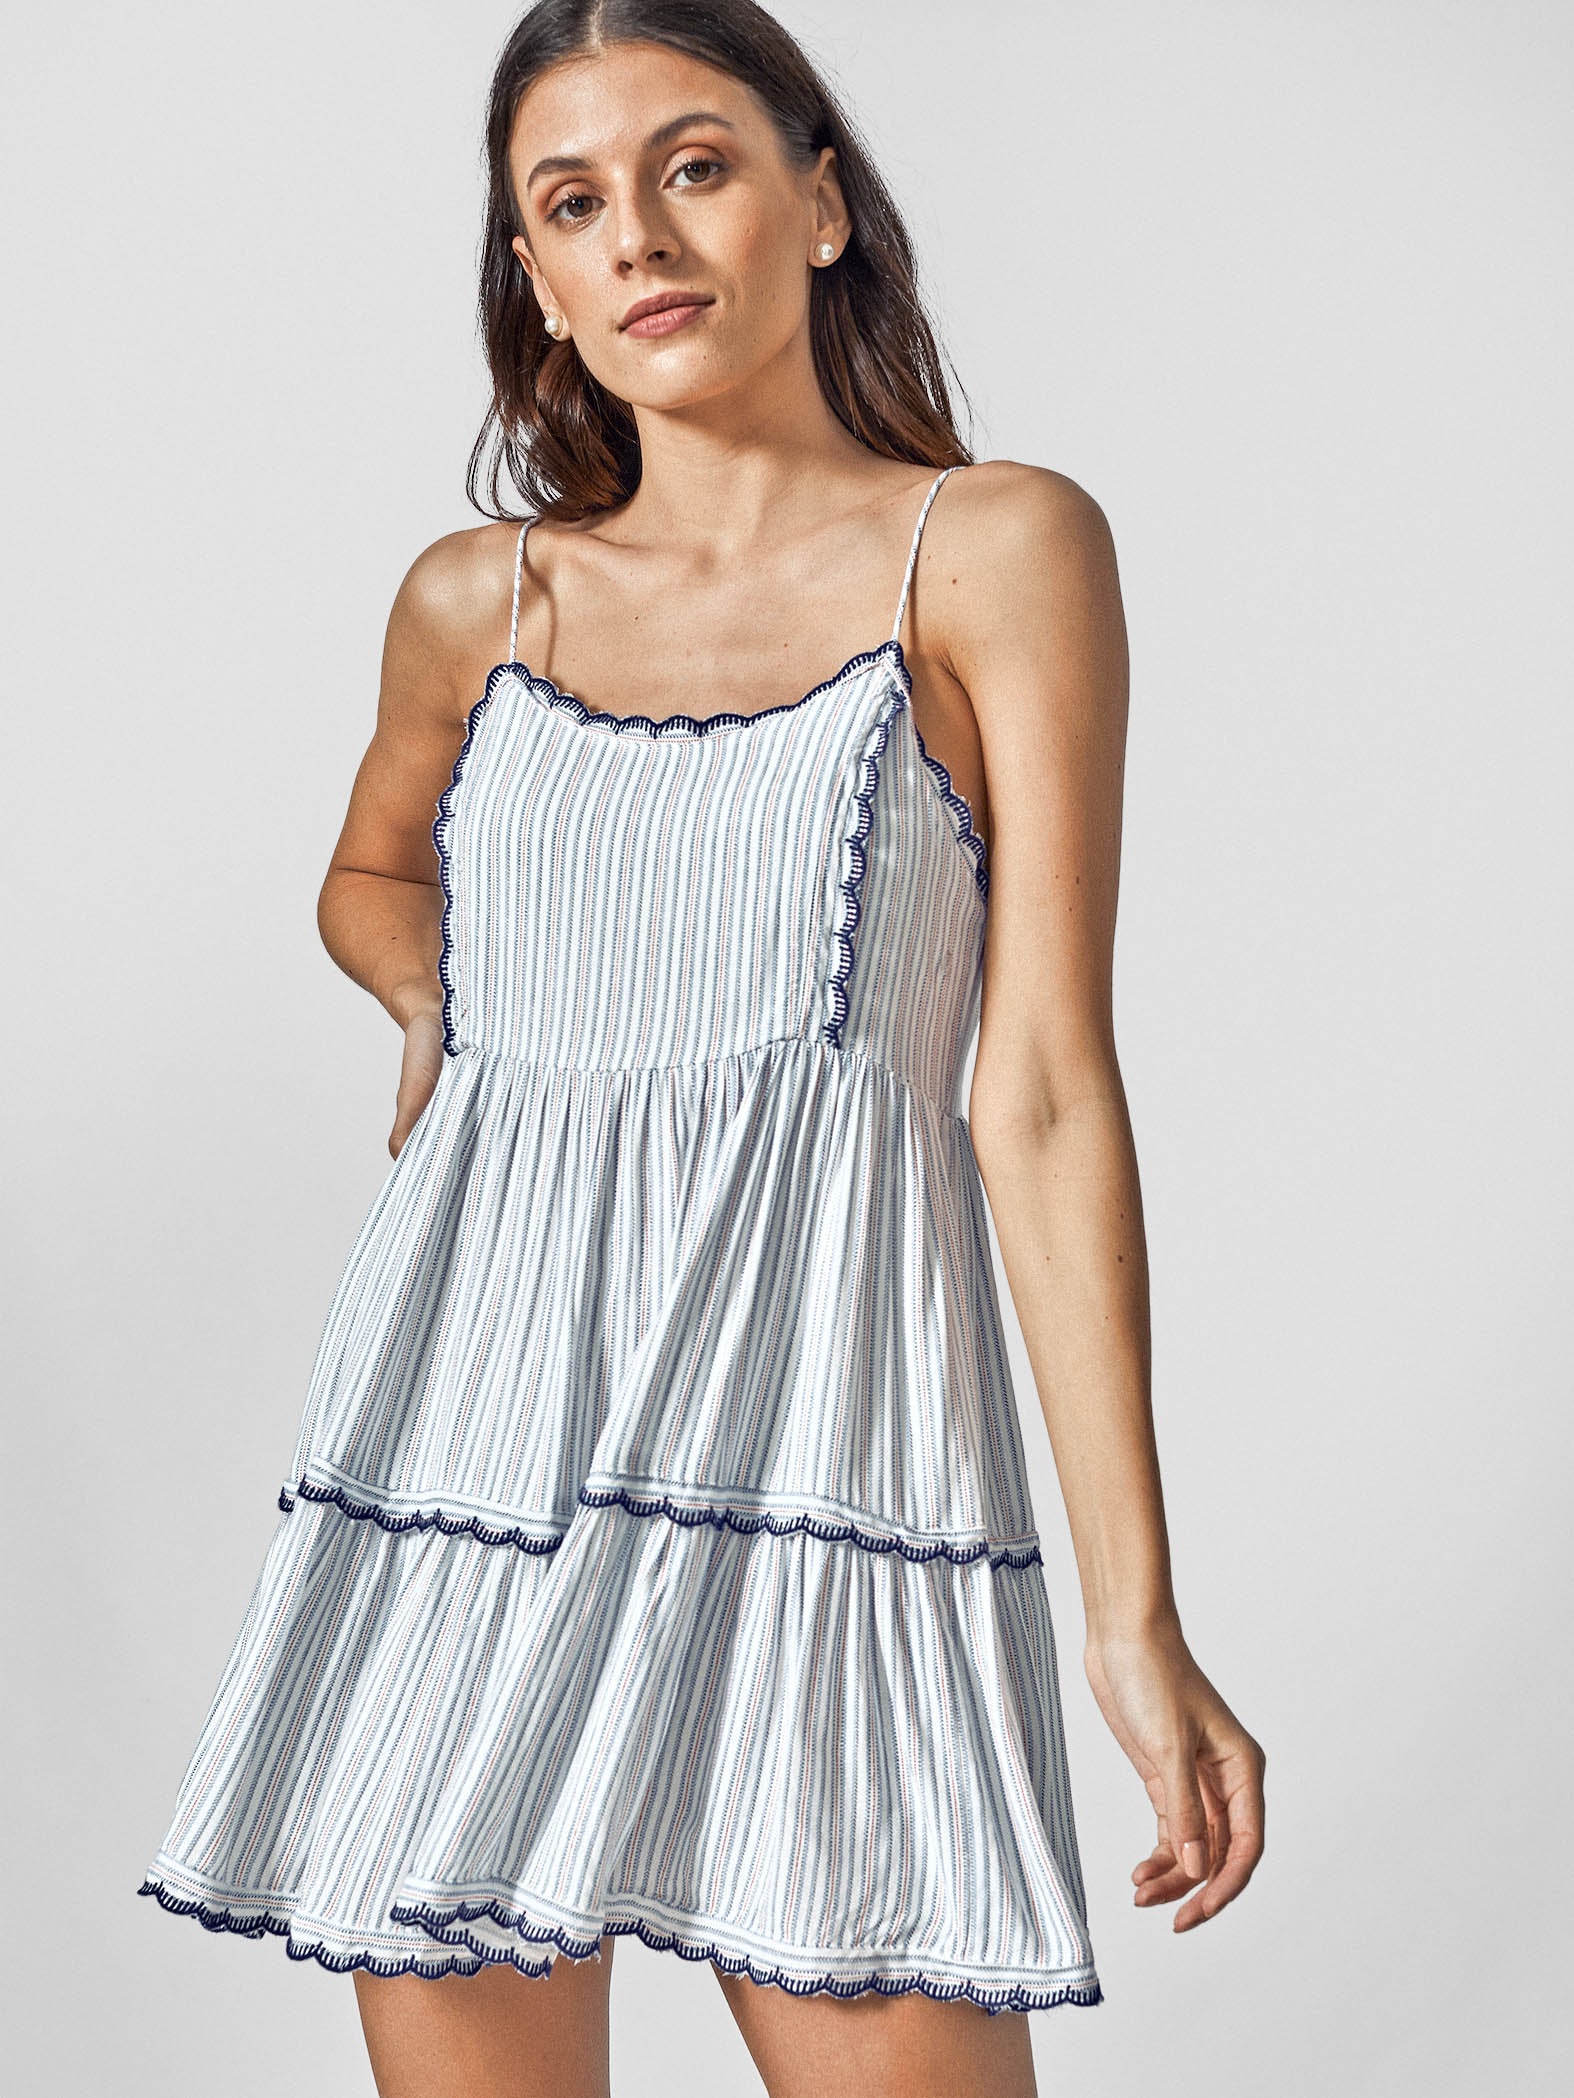 White Stripe Scallop Dress